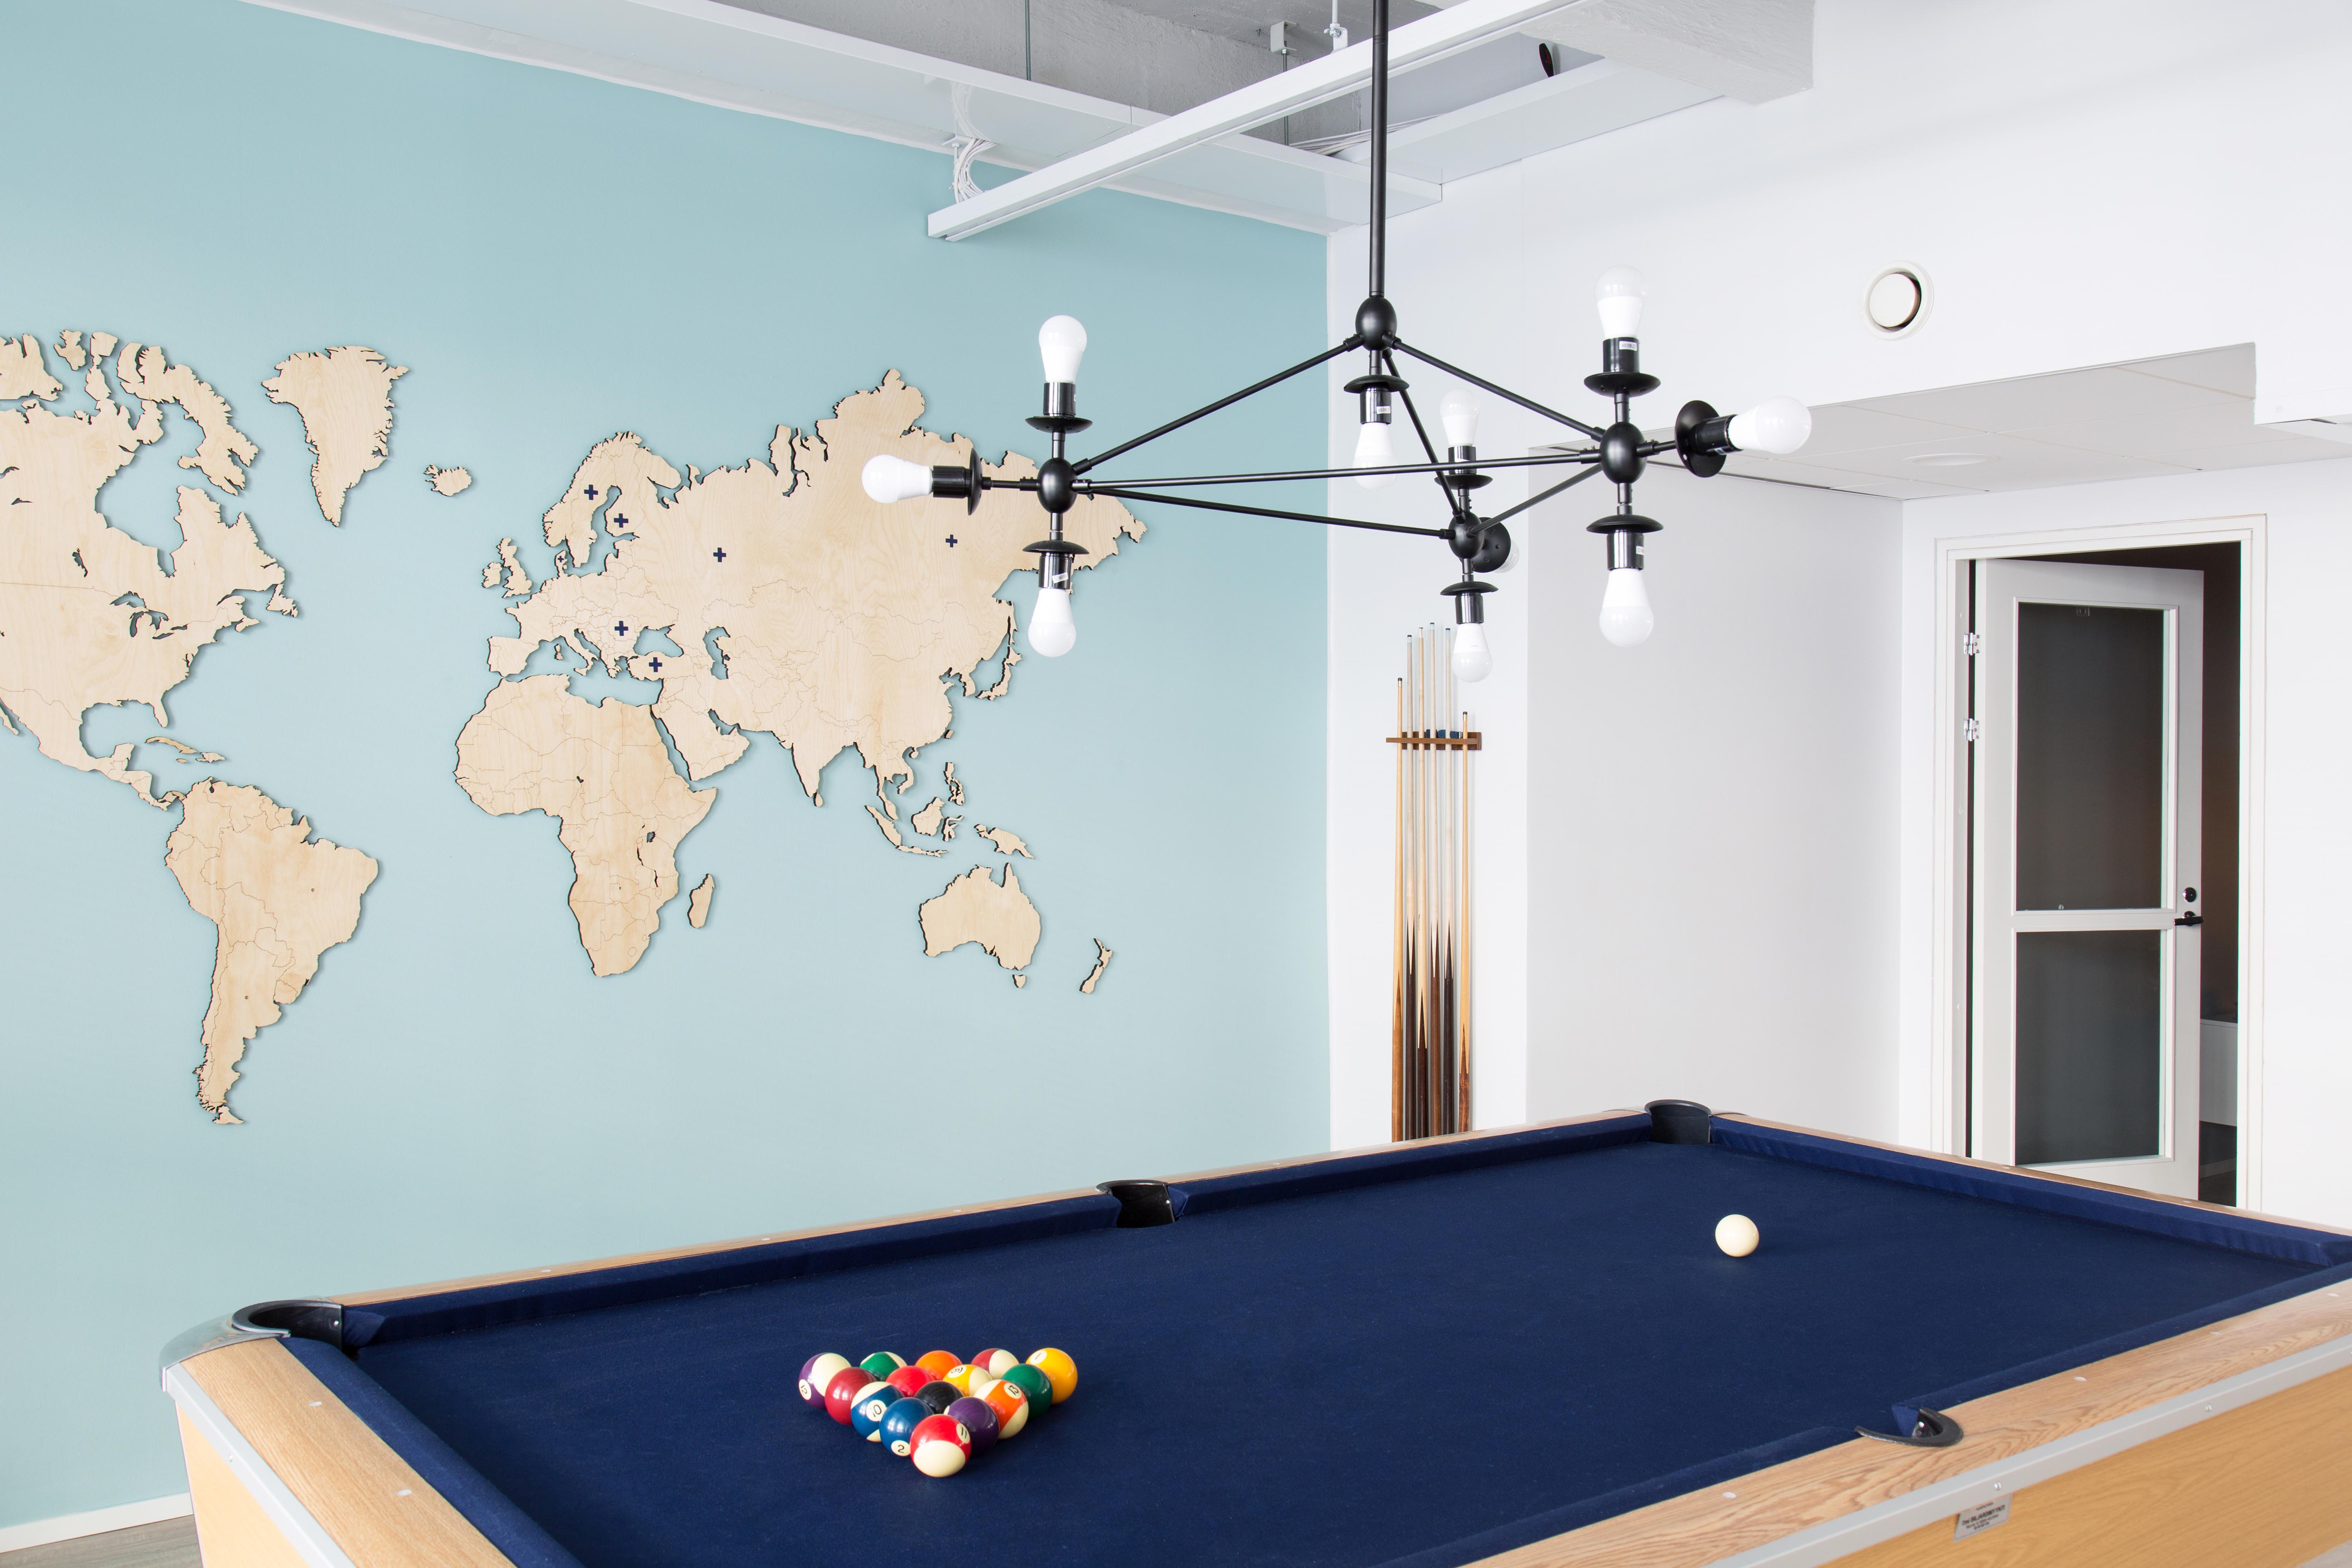 Bonusway office pool table and custom map